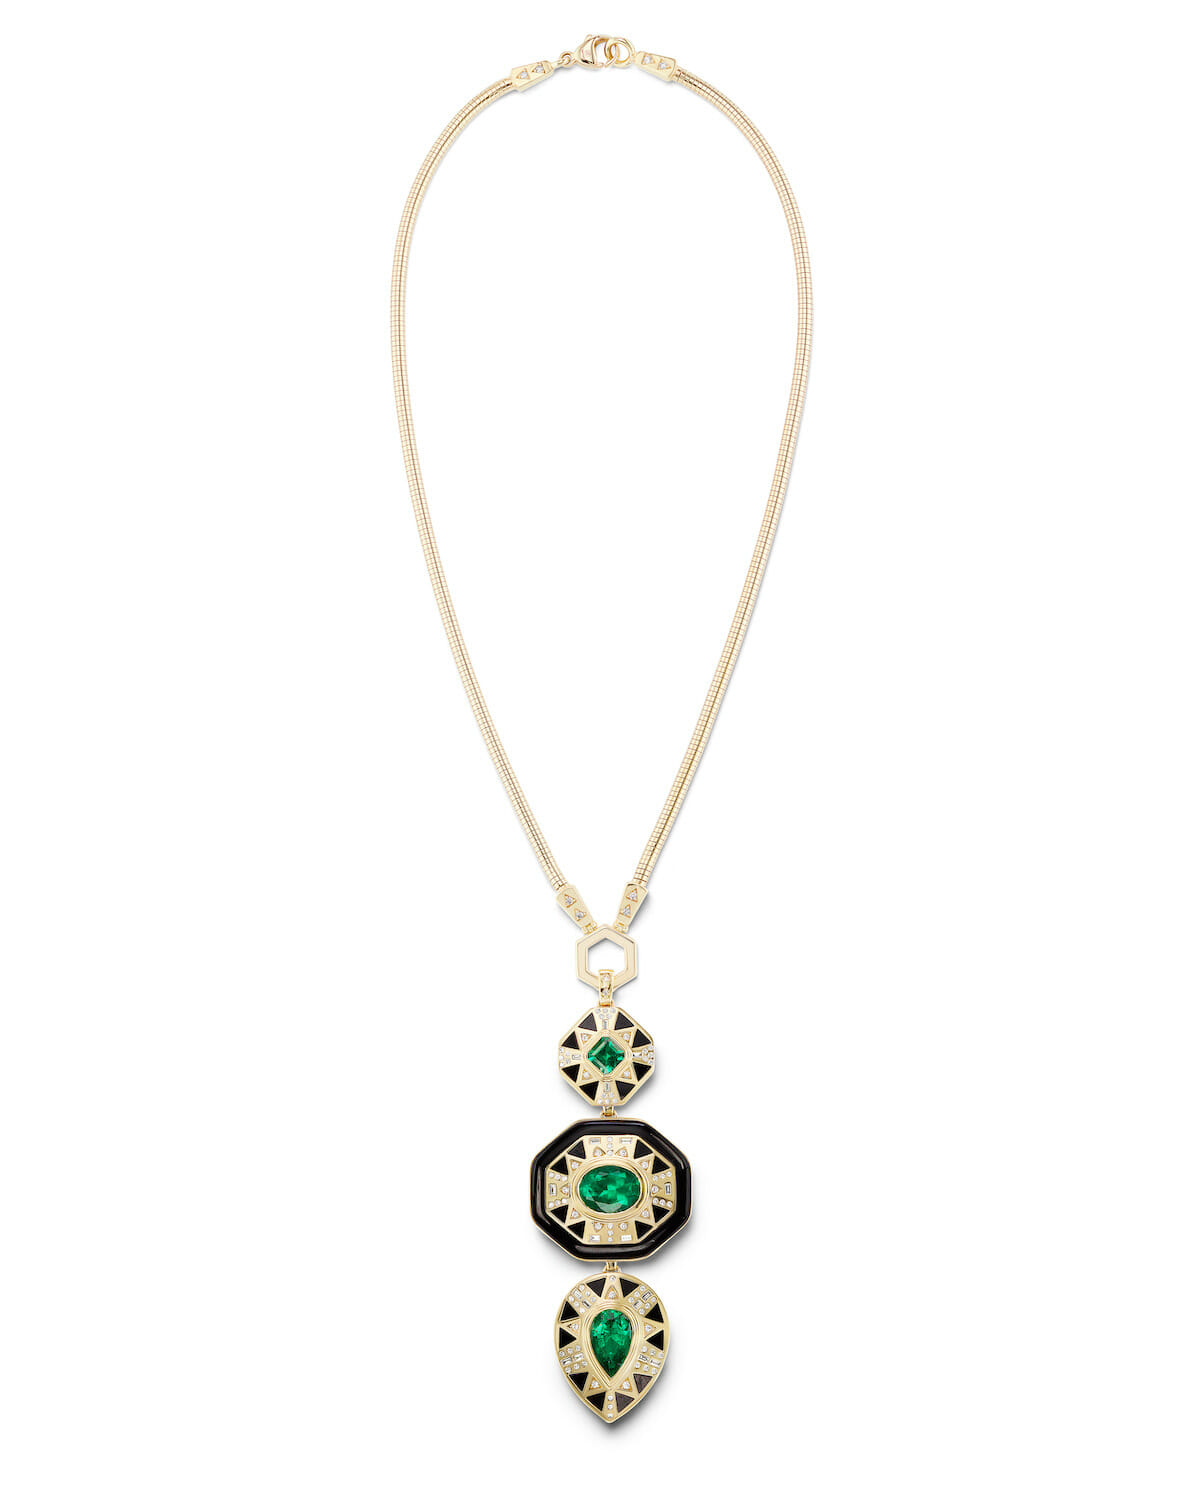 black jewelry designers sotheby's thelma west cleopatra vault pendant